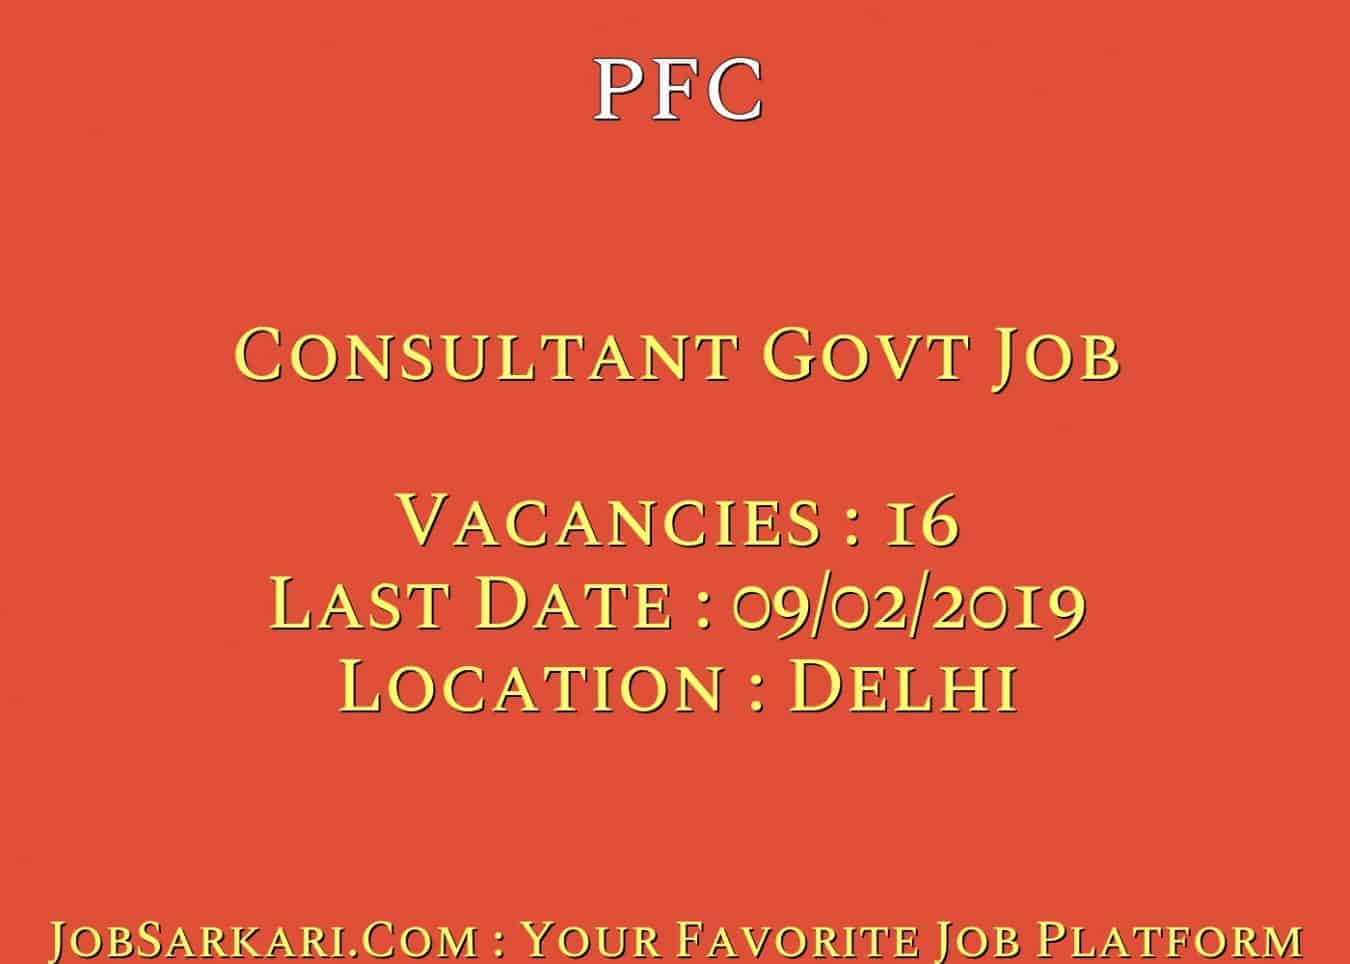 PFC Recruitment 2019 For Consultant Govt Job